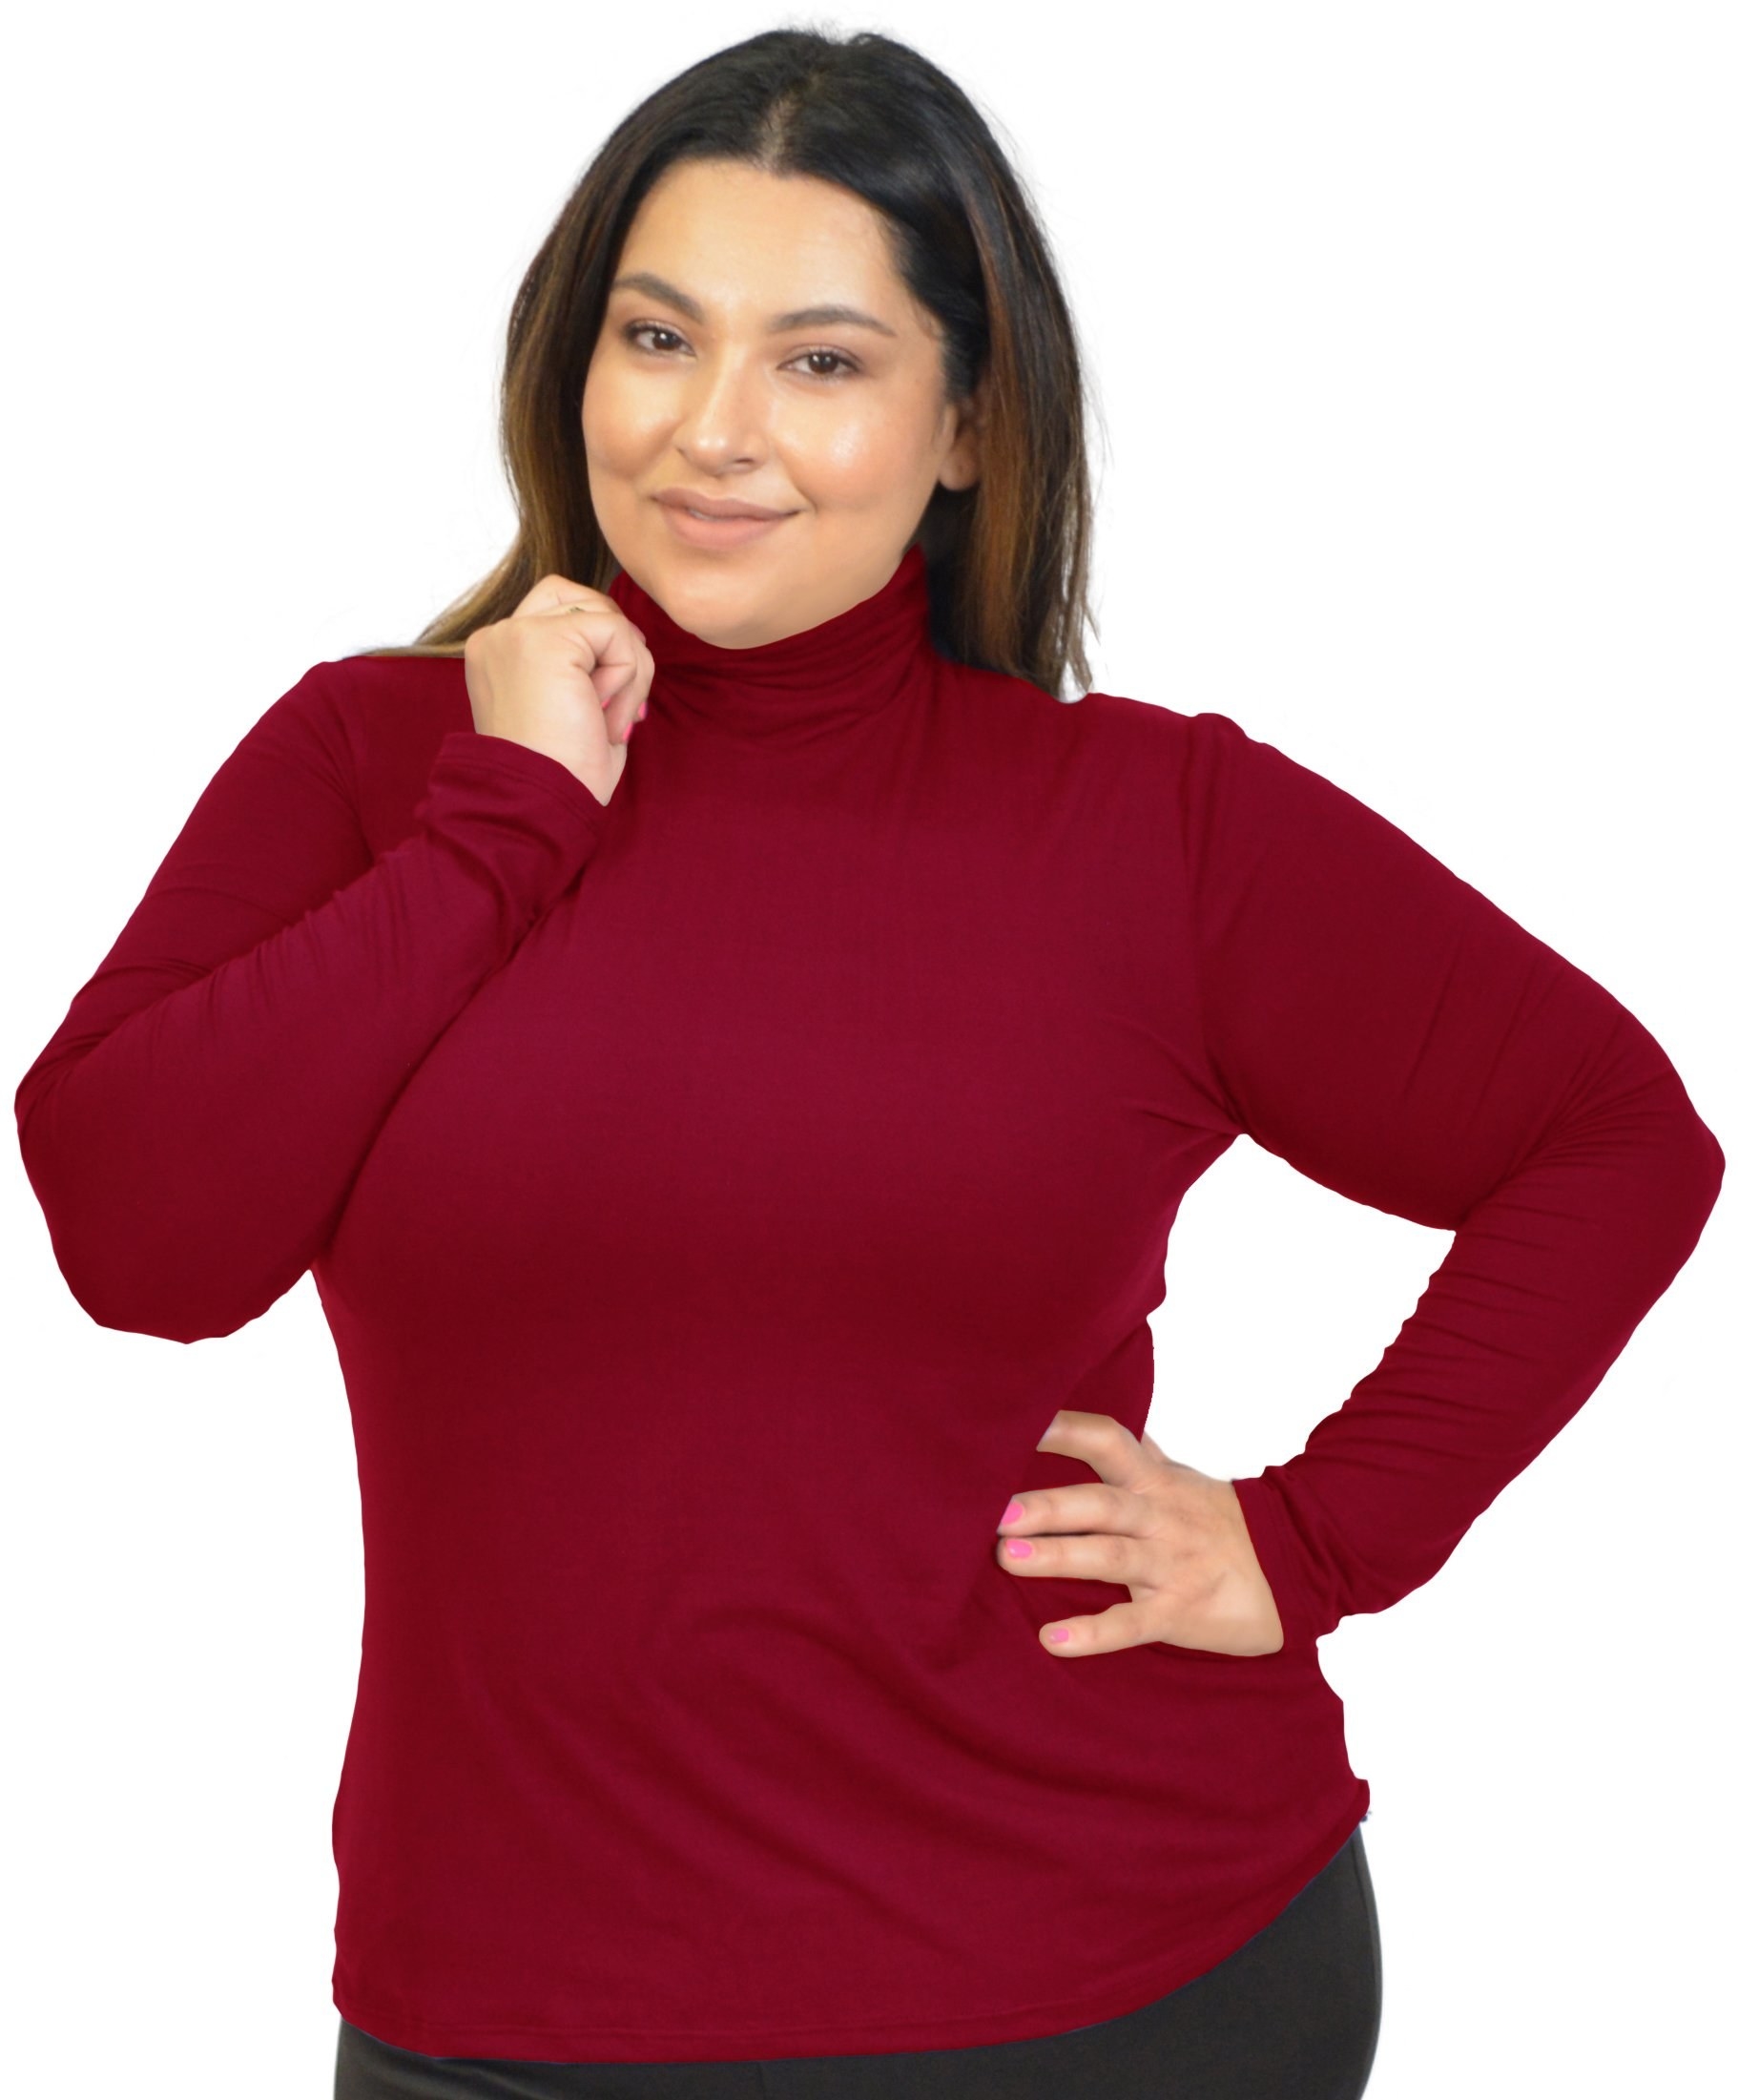 Model wearing the burgundy soft turtleneck top